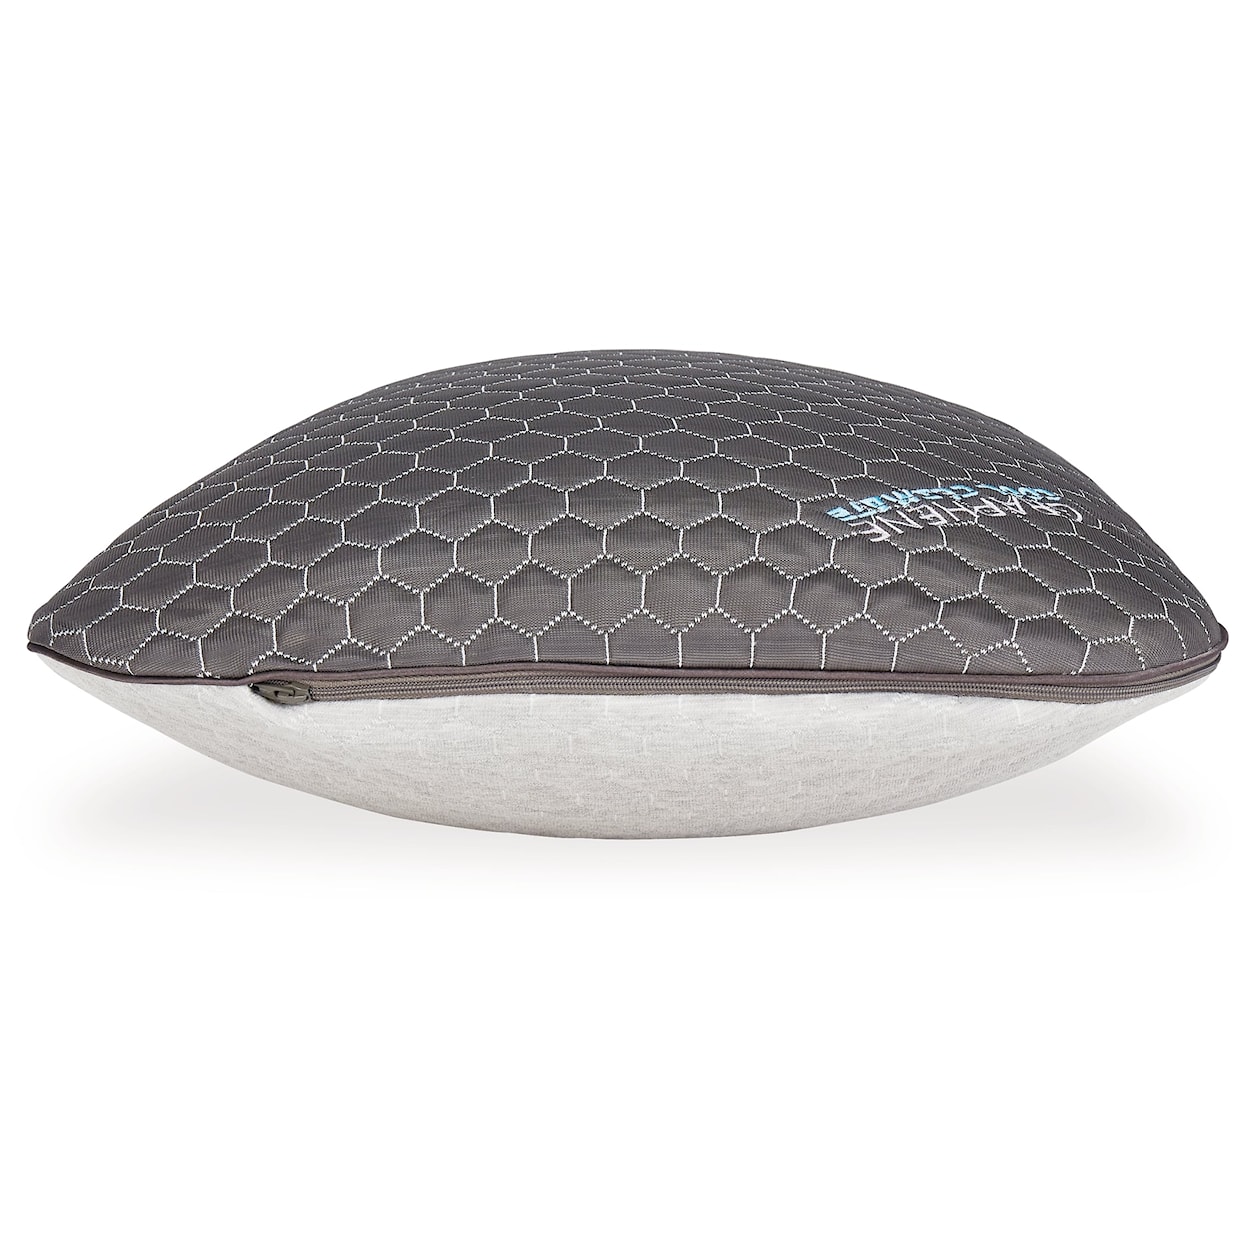 Sierra Sleep Zephyr 2.0 Graphene Contour Pillow (6/Cs)